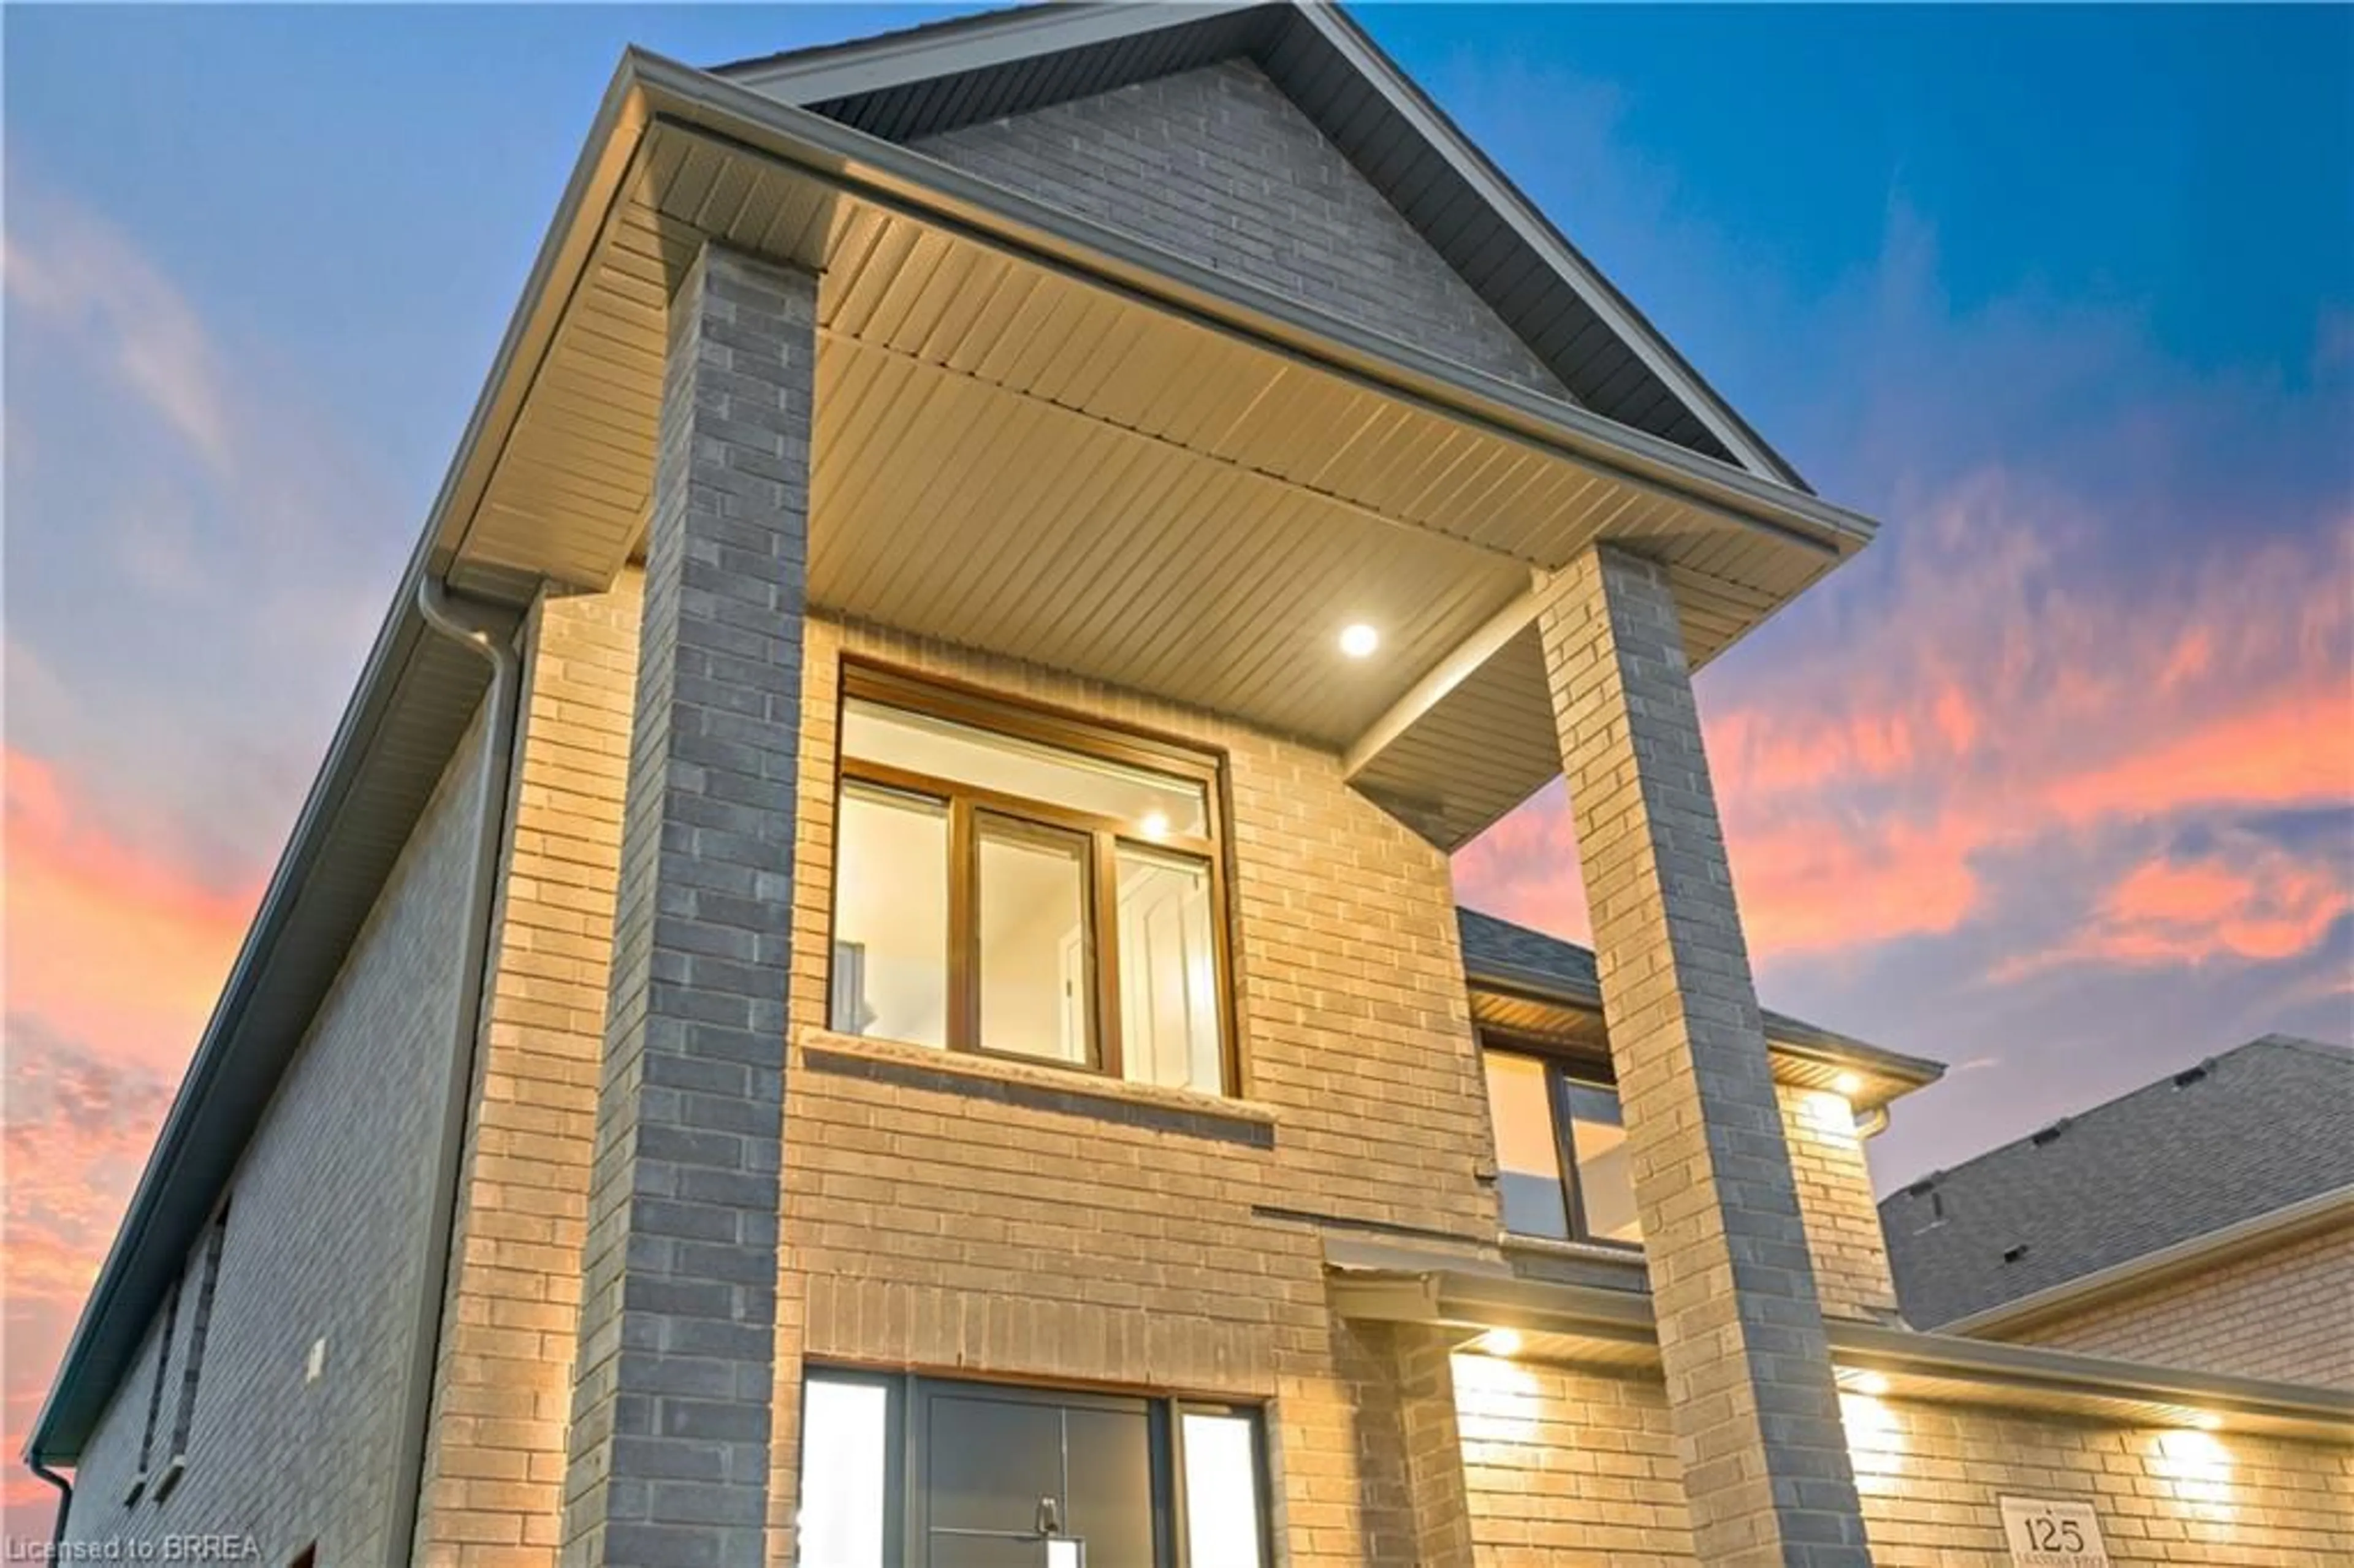 Home with brick exterior material for 125 Savannah Ridge Dr, Paris Ontario N3L 0G5